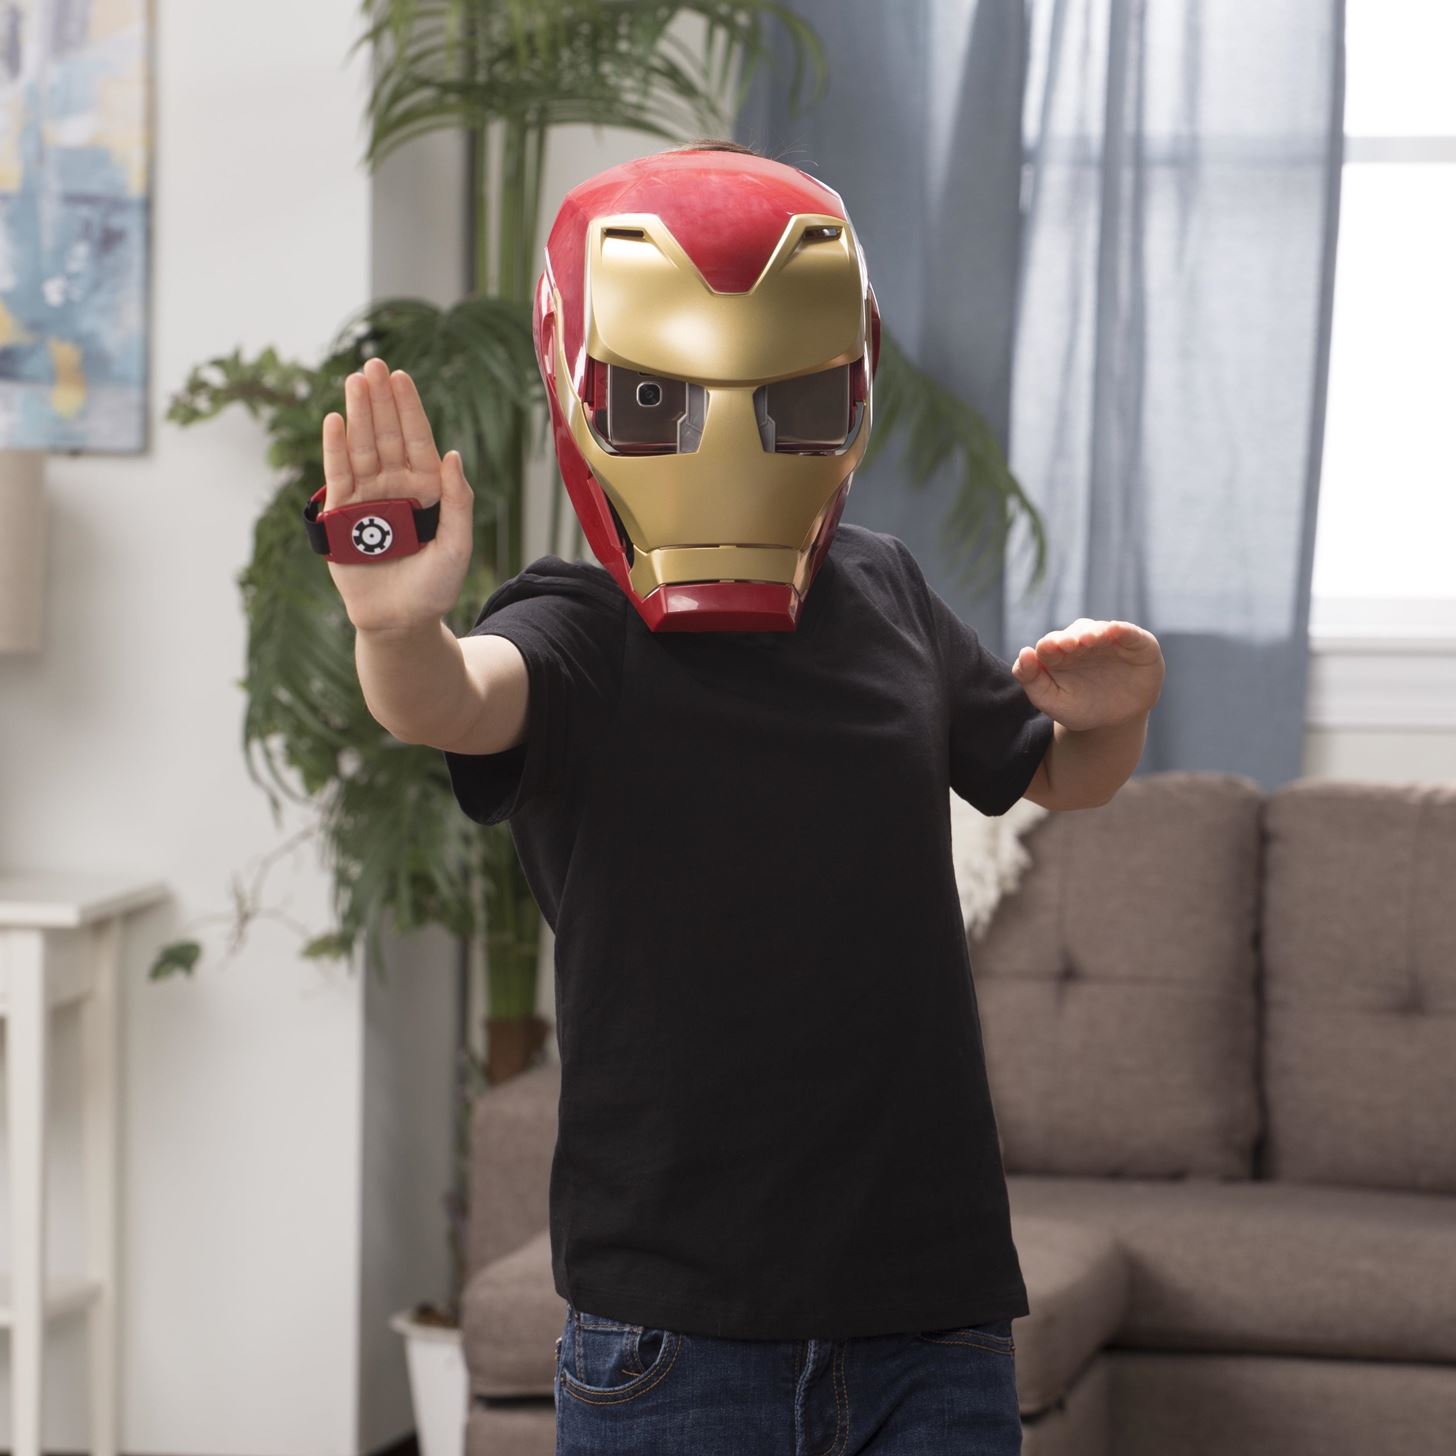 Hasbro Makes Marvel Movie Magic Real with Iron Man AR Helmet